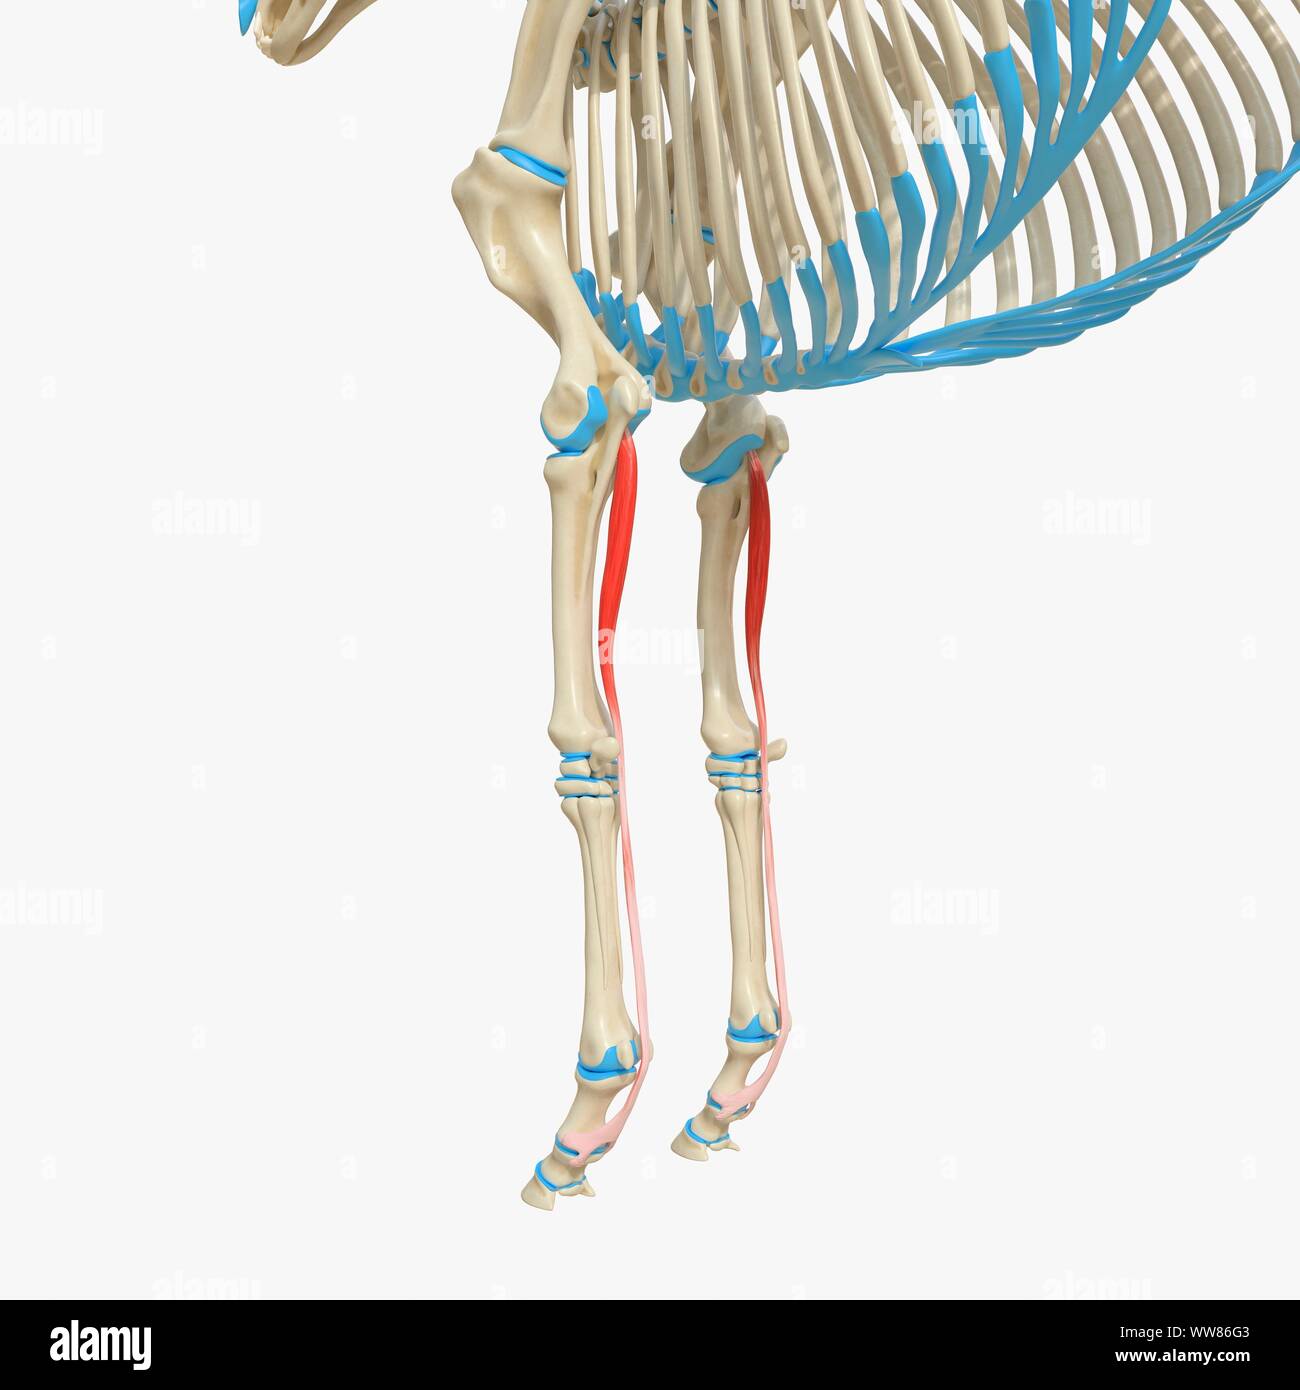 Horse superficial digital flexor muscle, illustration Stock Photo